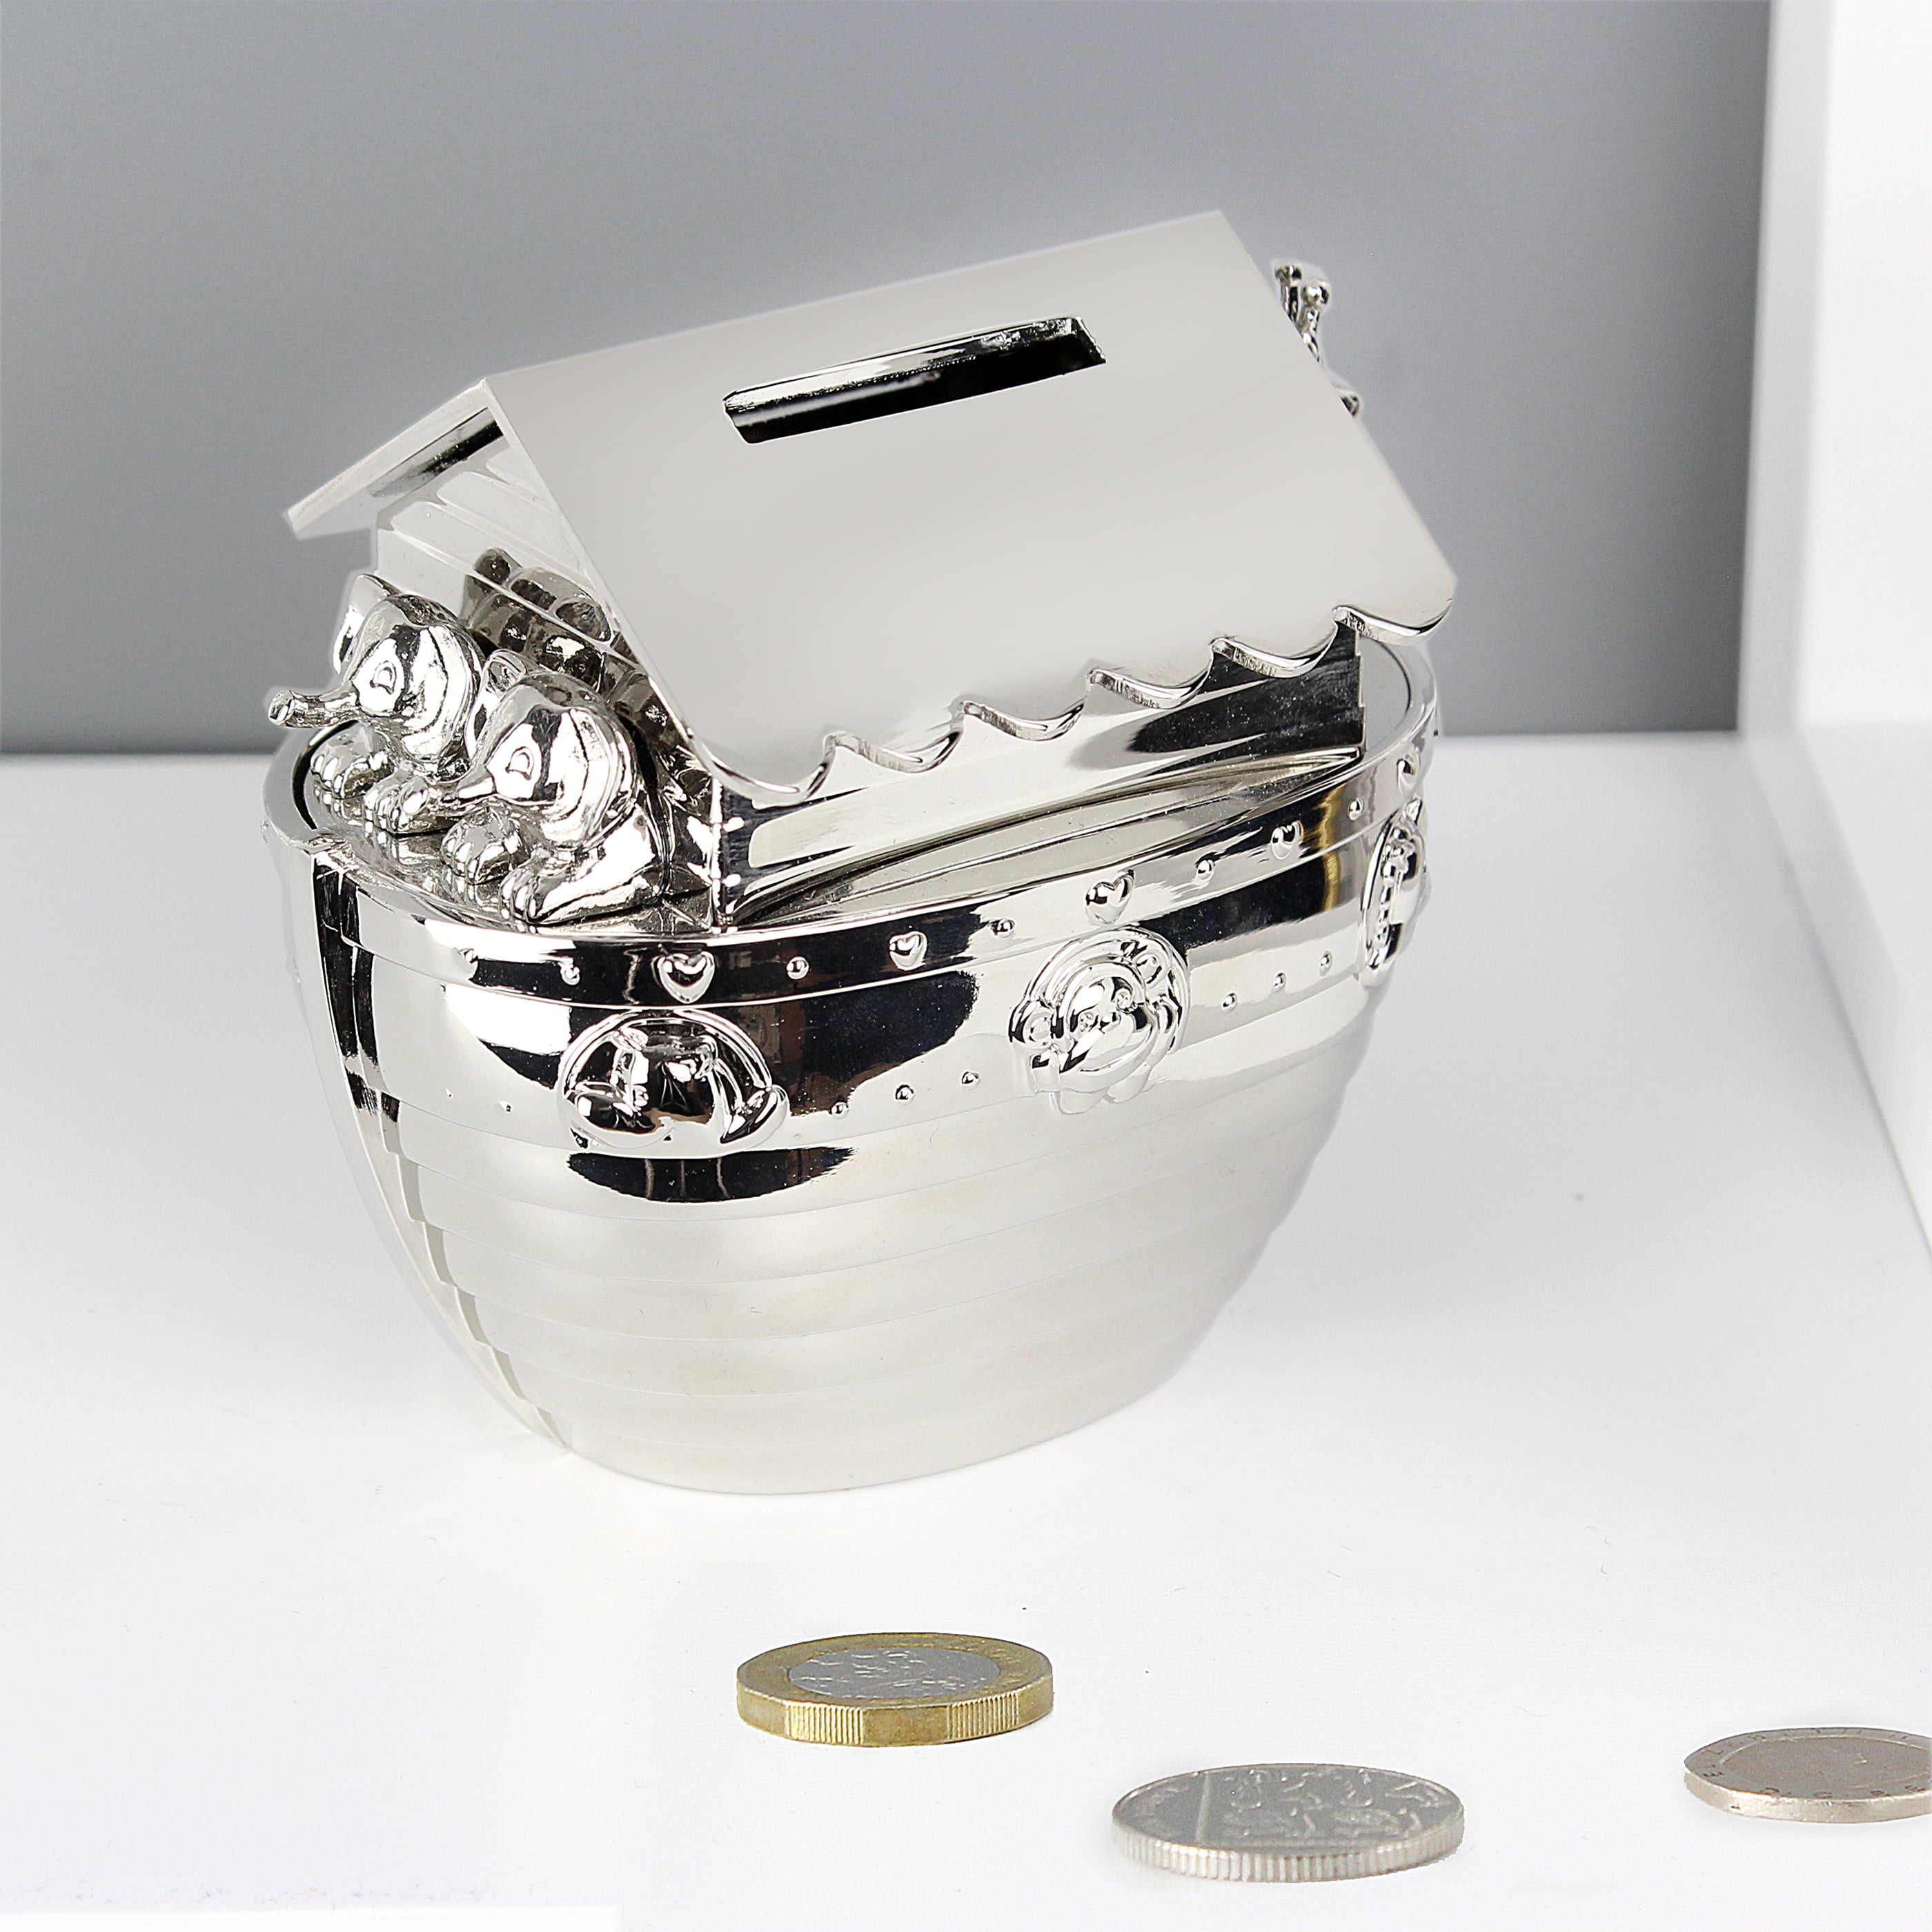 Personalised Silver Noahs Ark Money Box